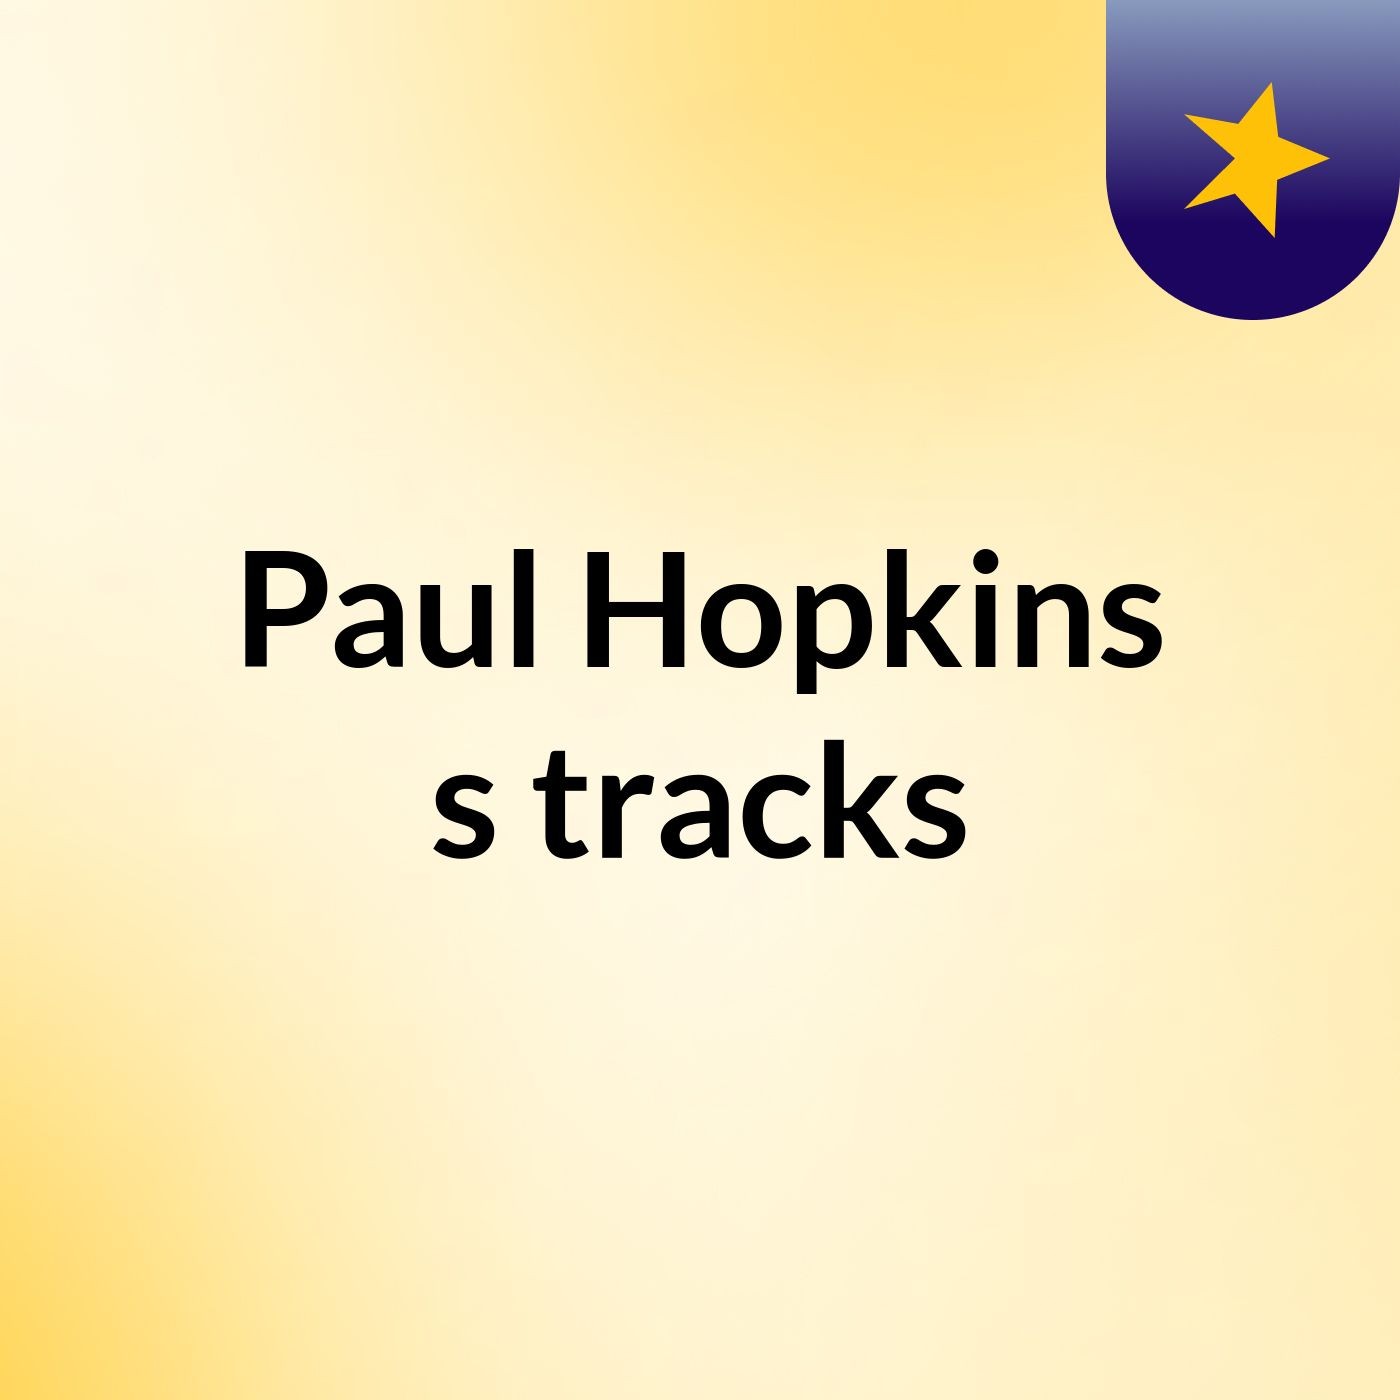 Paul Hopkins's tracks